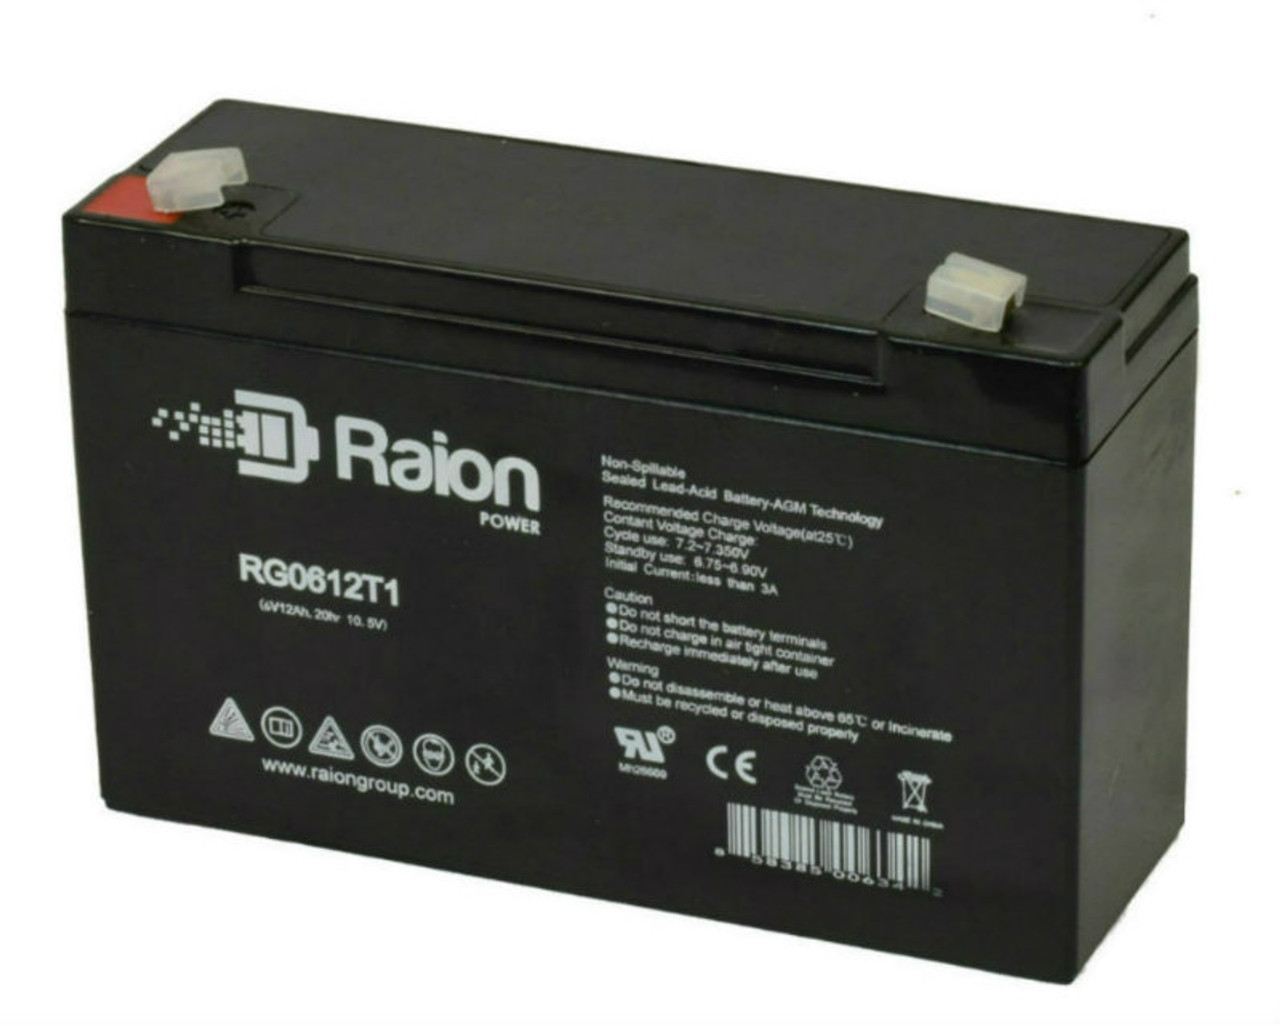 Raion Power RG06120T1 Replacement 6V 12Ah Emergency Light Battery for Light Alarms X79BRA2L